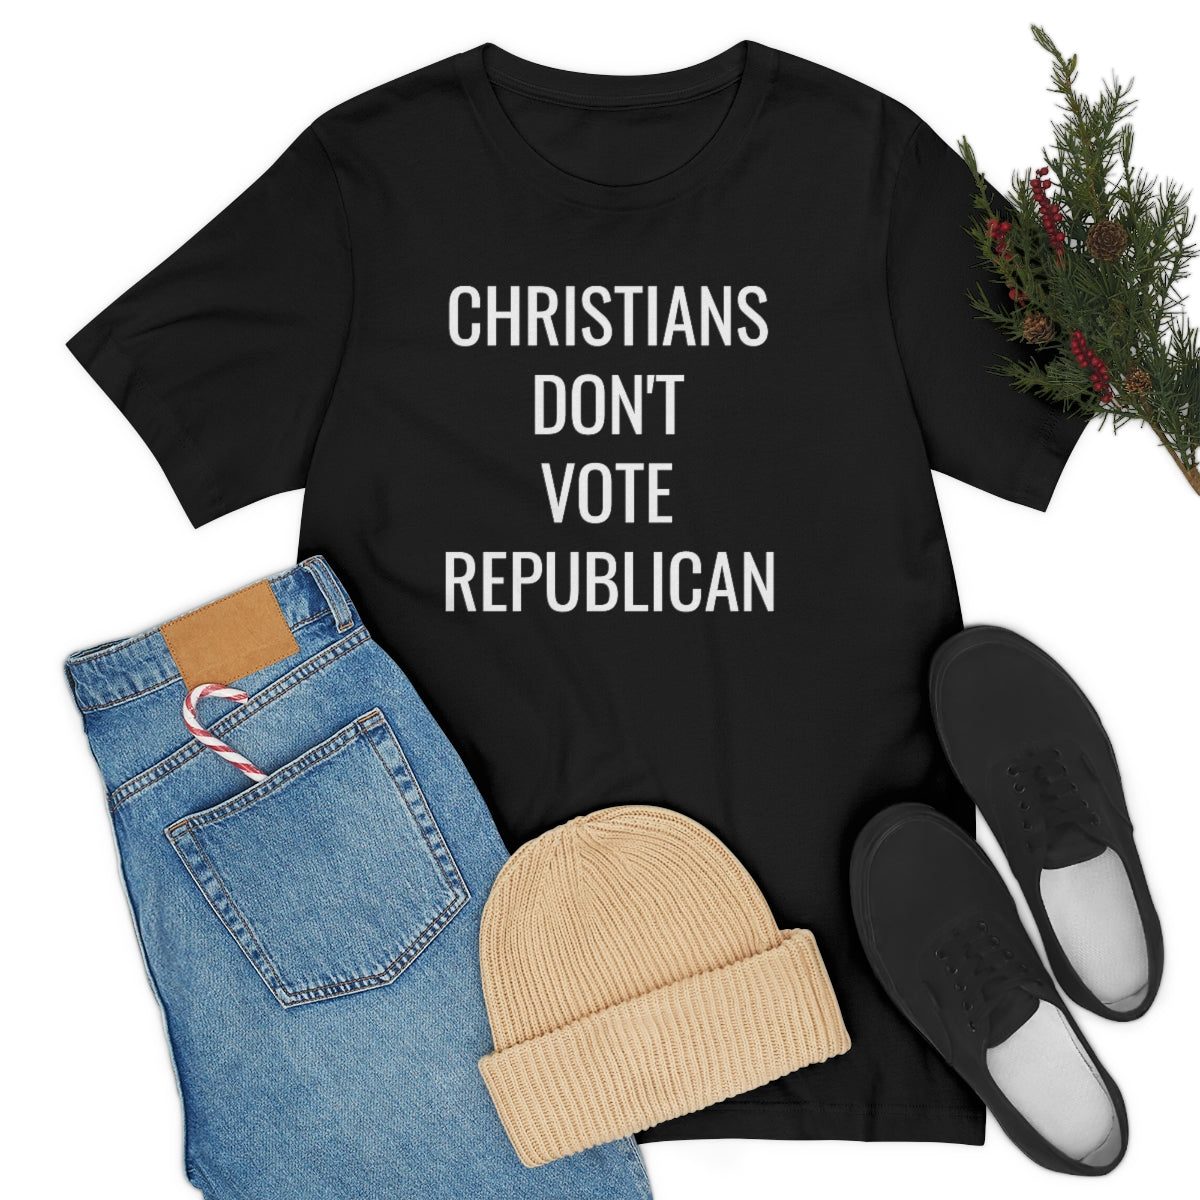 CHRISTIANS DON'T VOTE REPUBLICAN Unisex Jersey Short Sleeve Black Tee (SirTalksALot Exclusive)